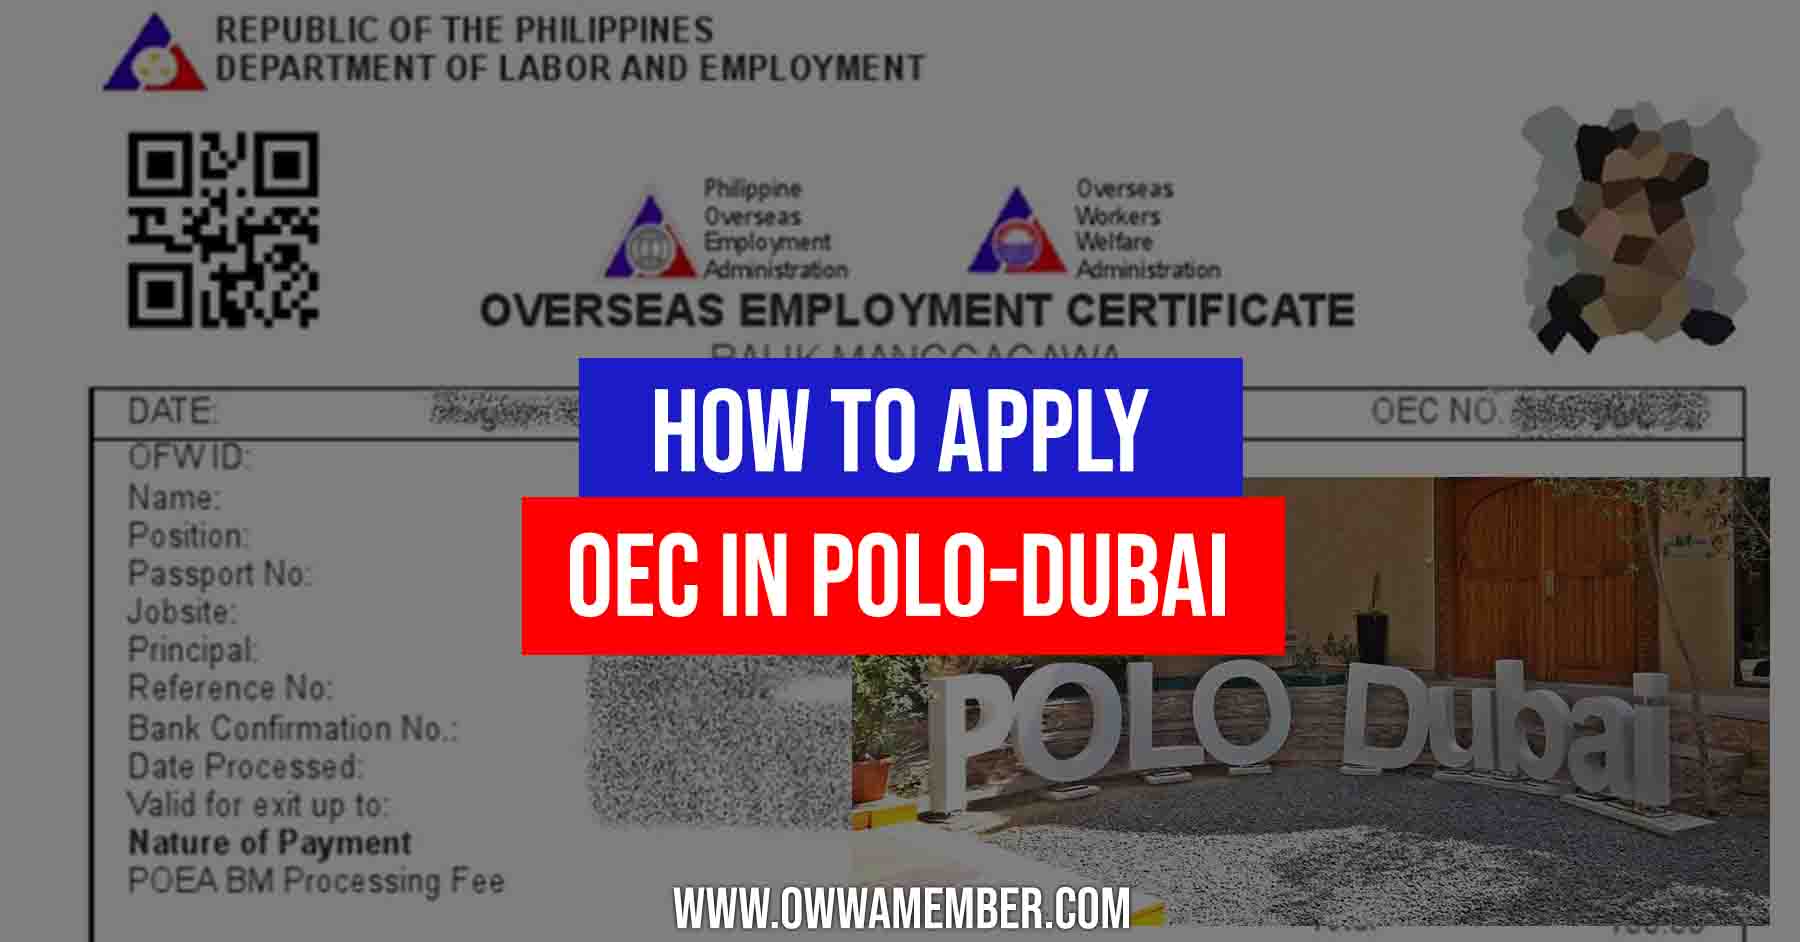 how to apply oec polo-dubai